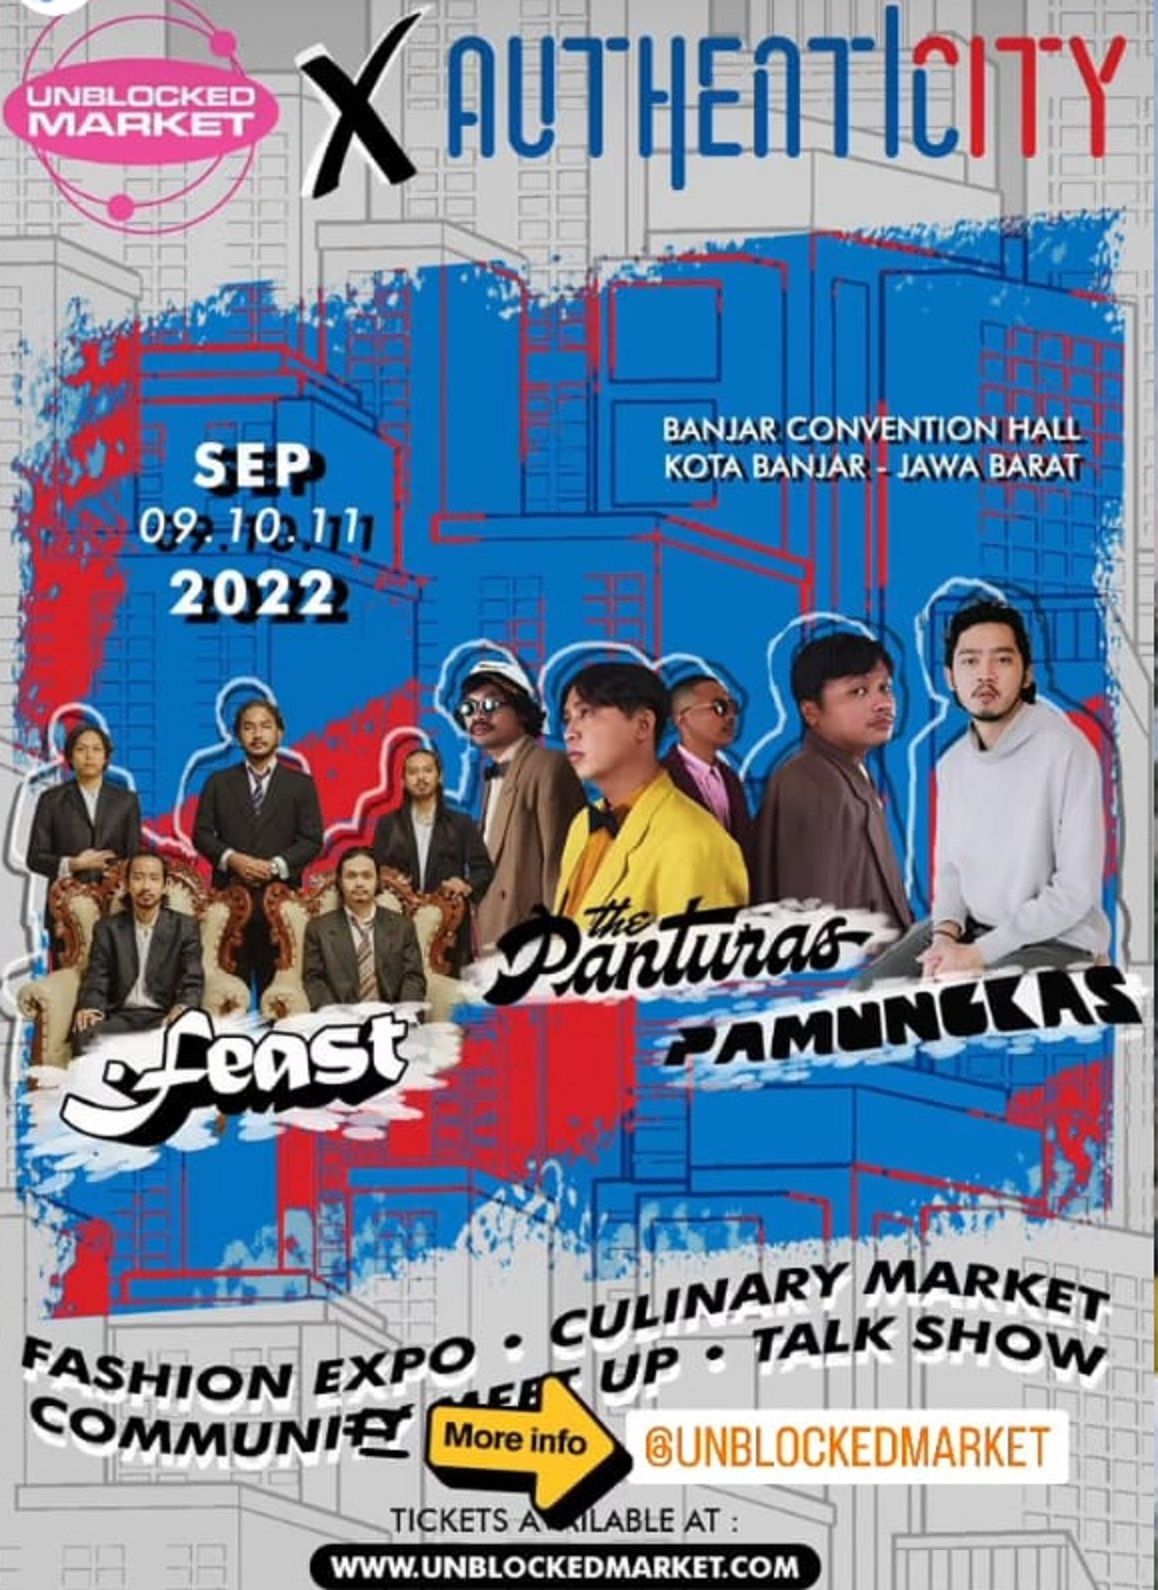 THE PANTURAS, .FEAST dan PAMUNGKAS Bakal Manggung di Kota Banjar dalam Festival 'UNBLOCKED MARKET' Merapat Yu!